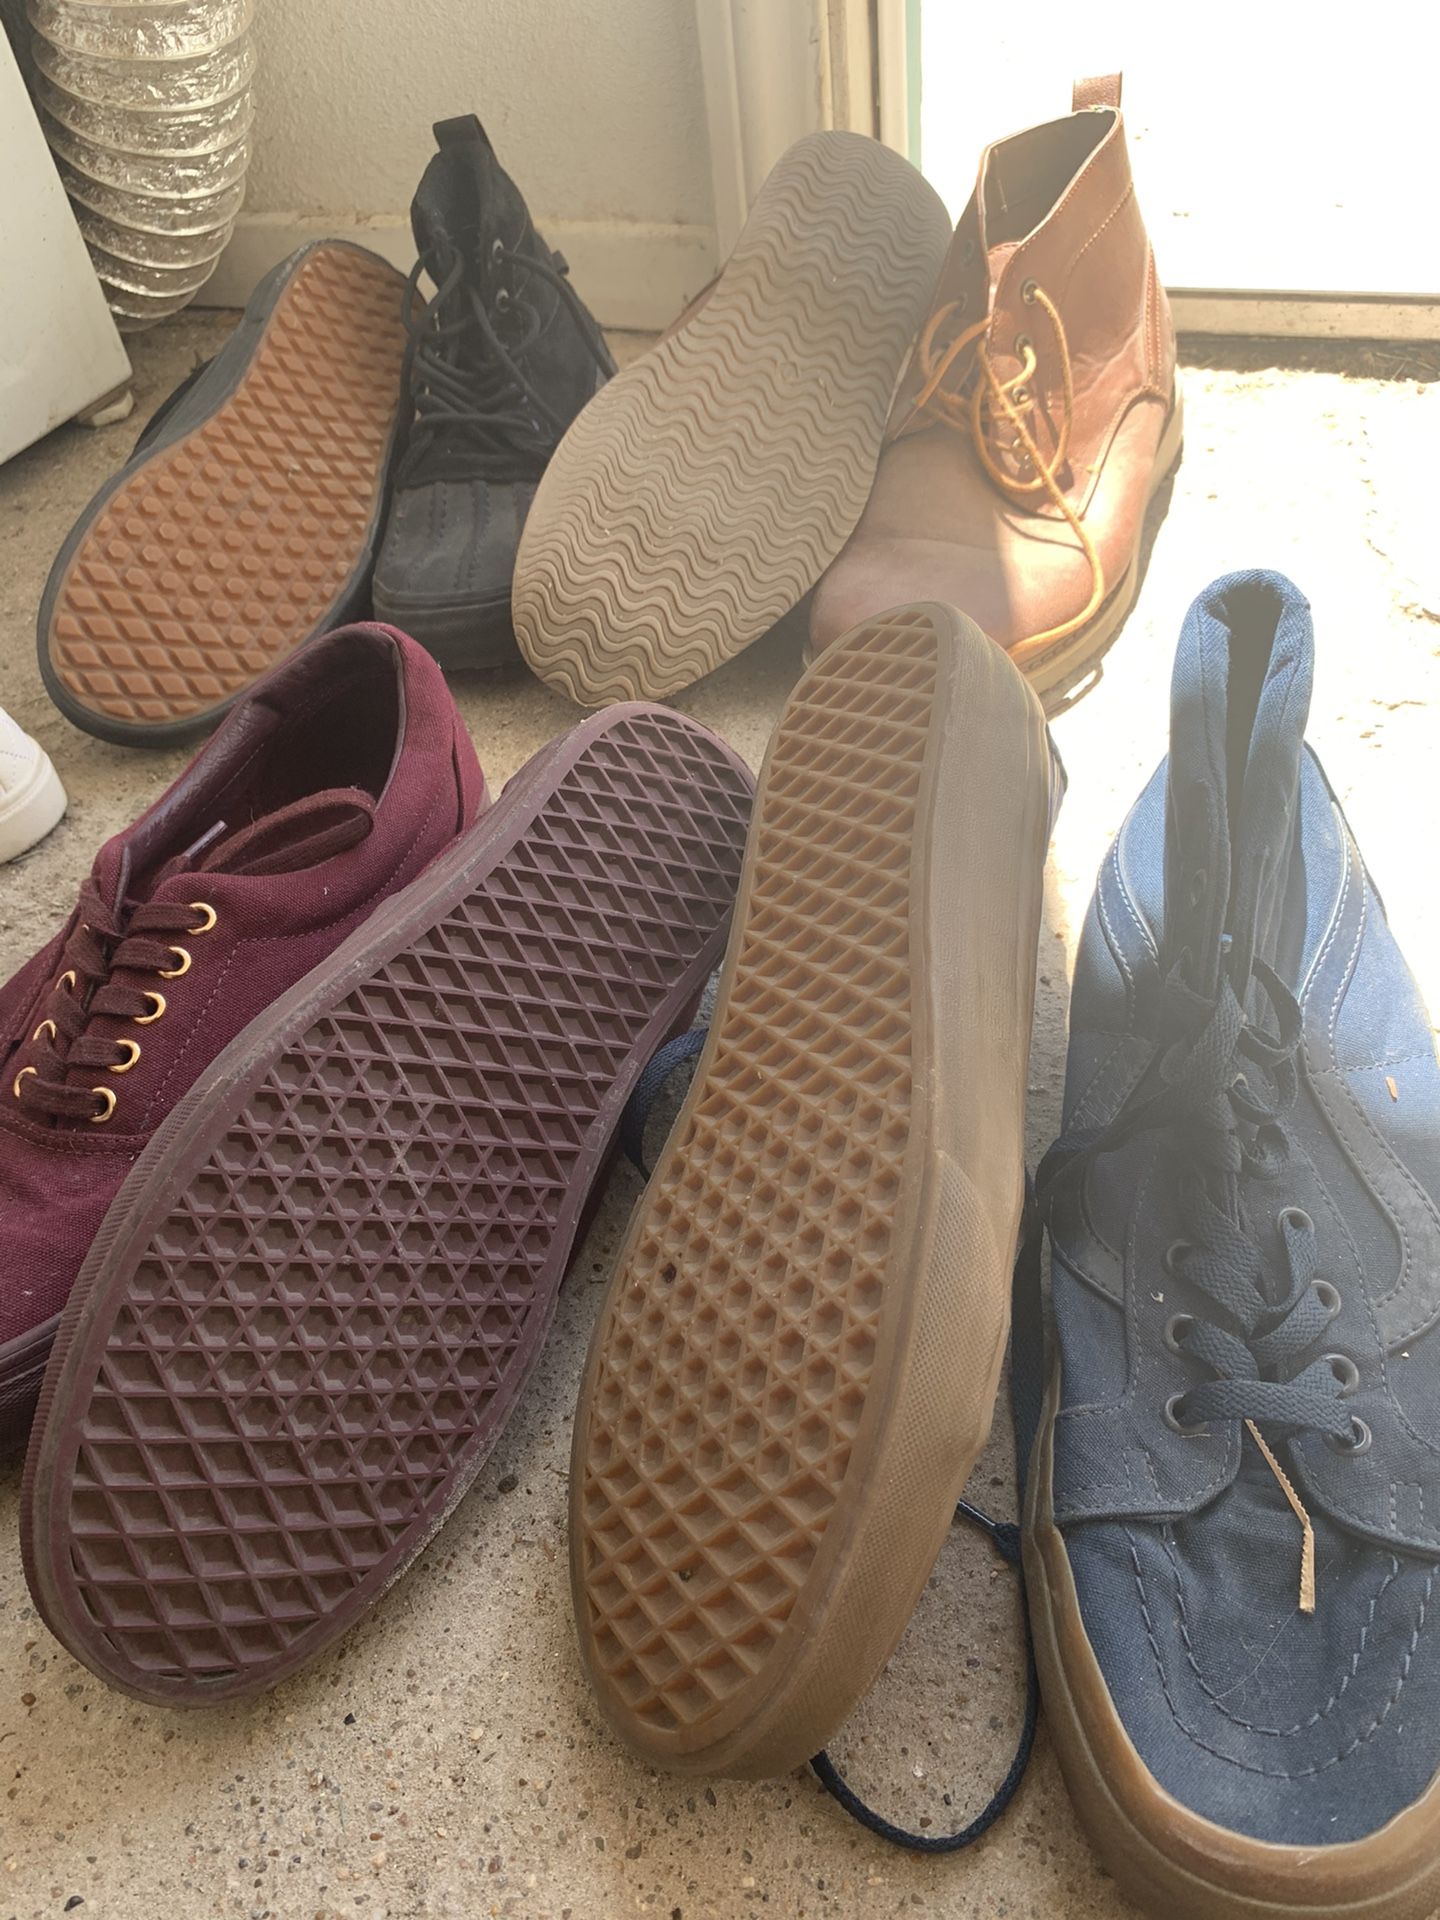 Vans men’s shoes and boots